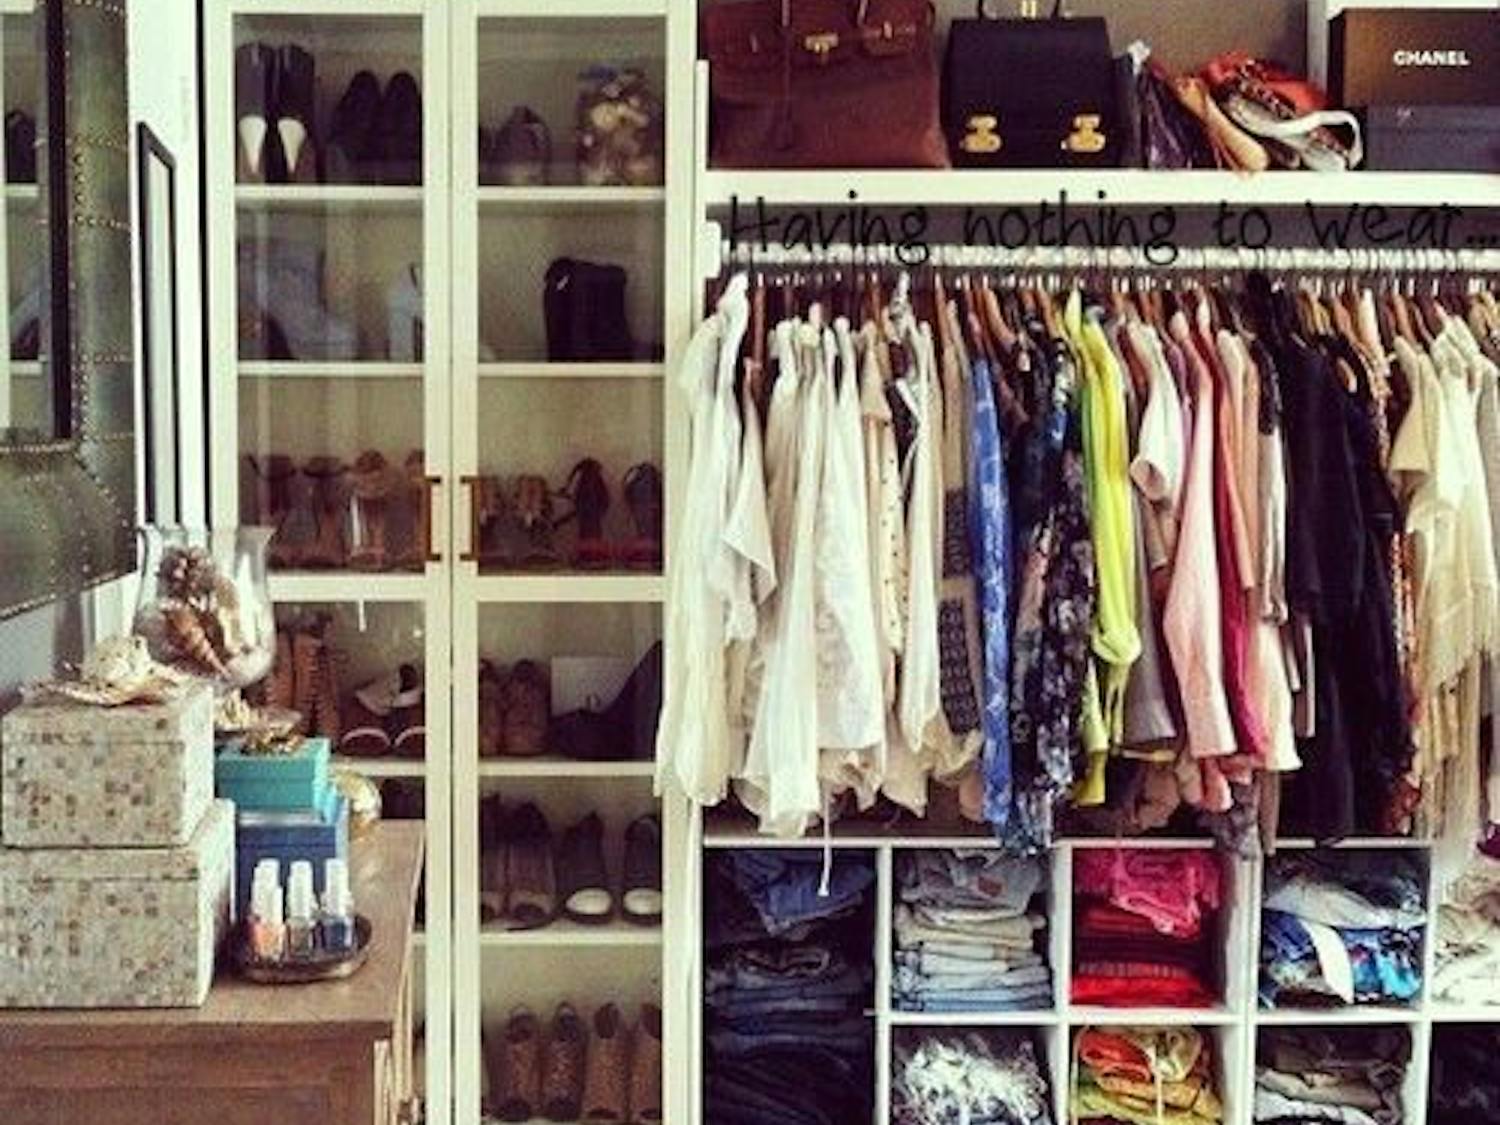 Perfectly organized closet. Photo courtesy Tumblr.com